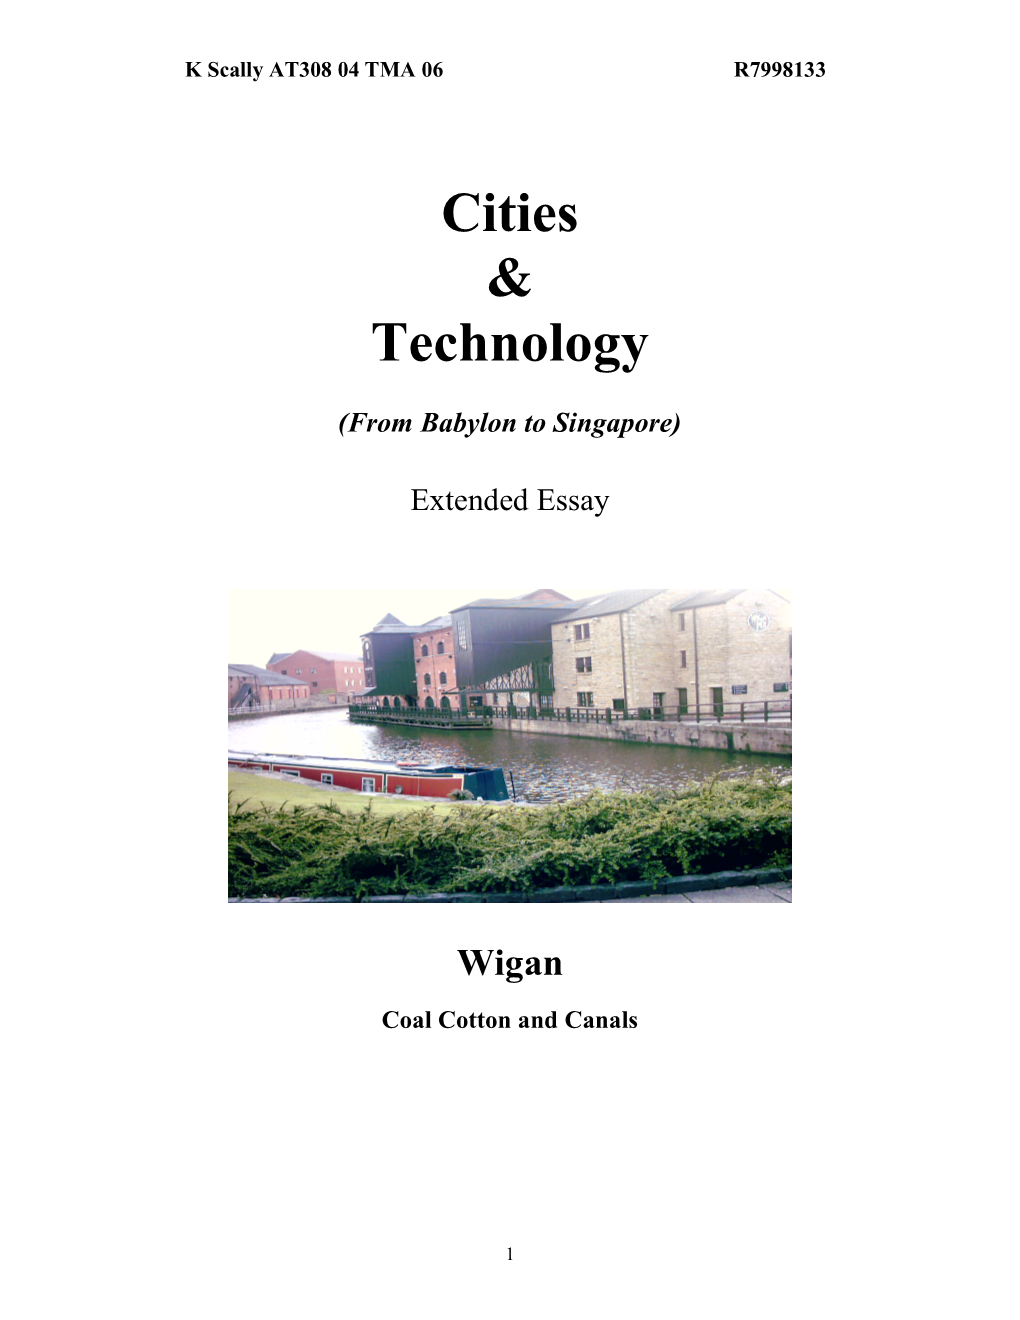 Cities & Technology